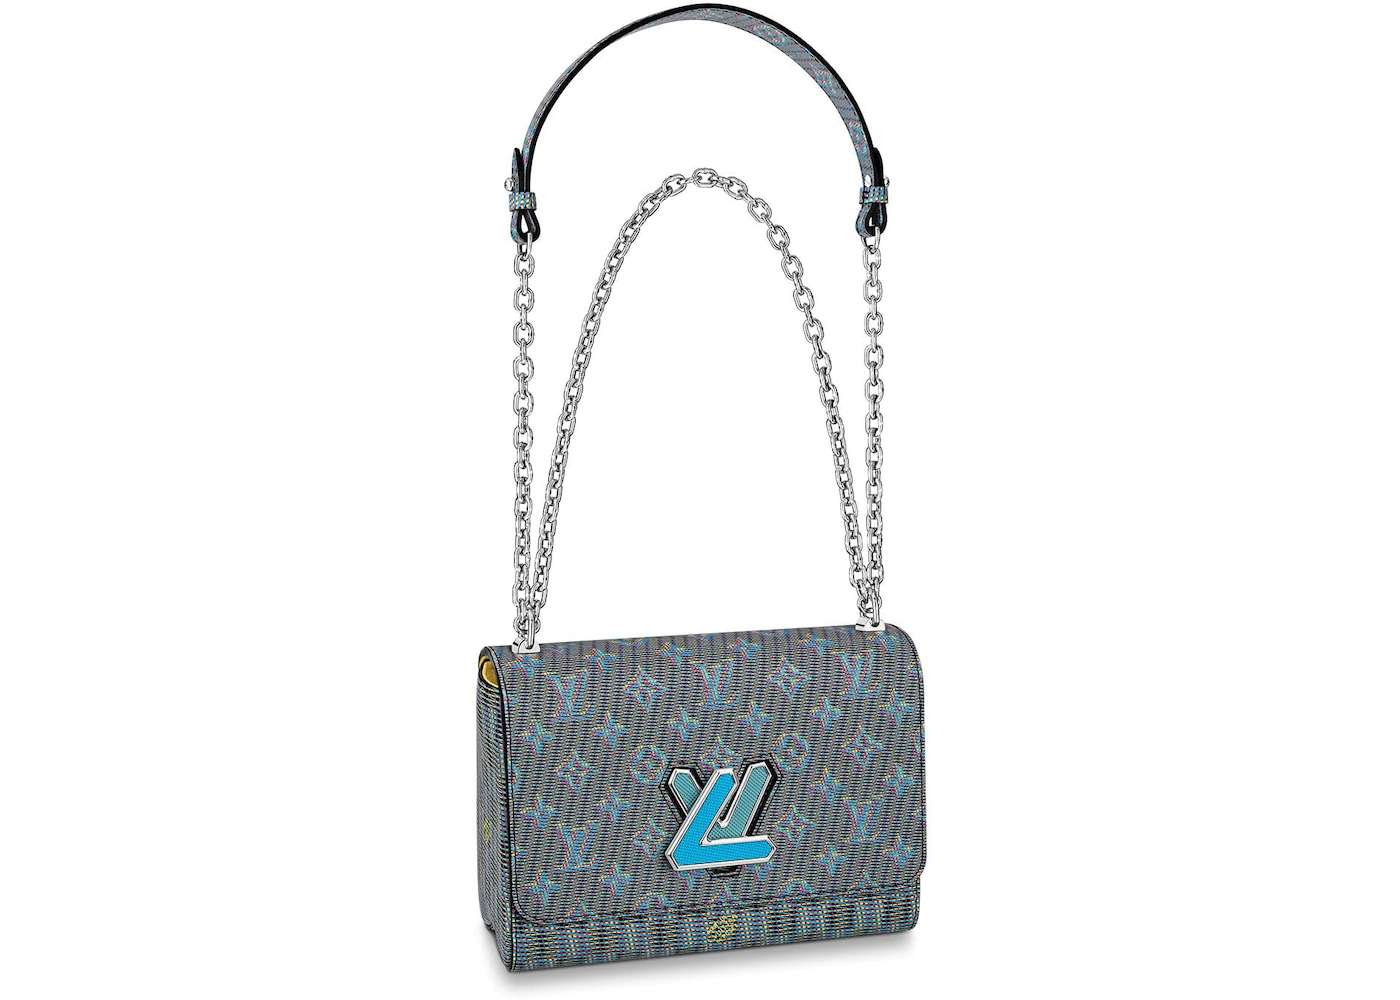 Louis Vuitton Twist Damier Monogram LV Pop MM Blue in Calf Leather